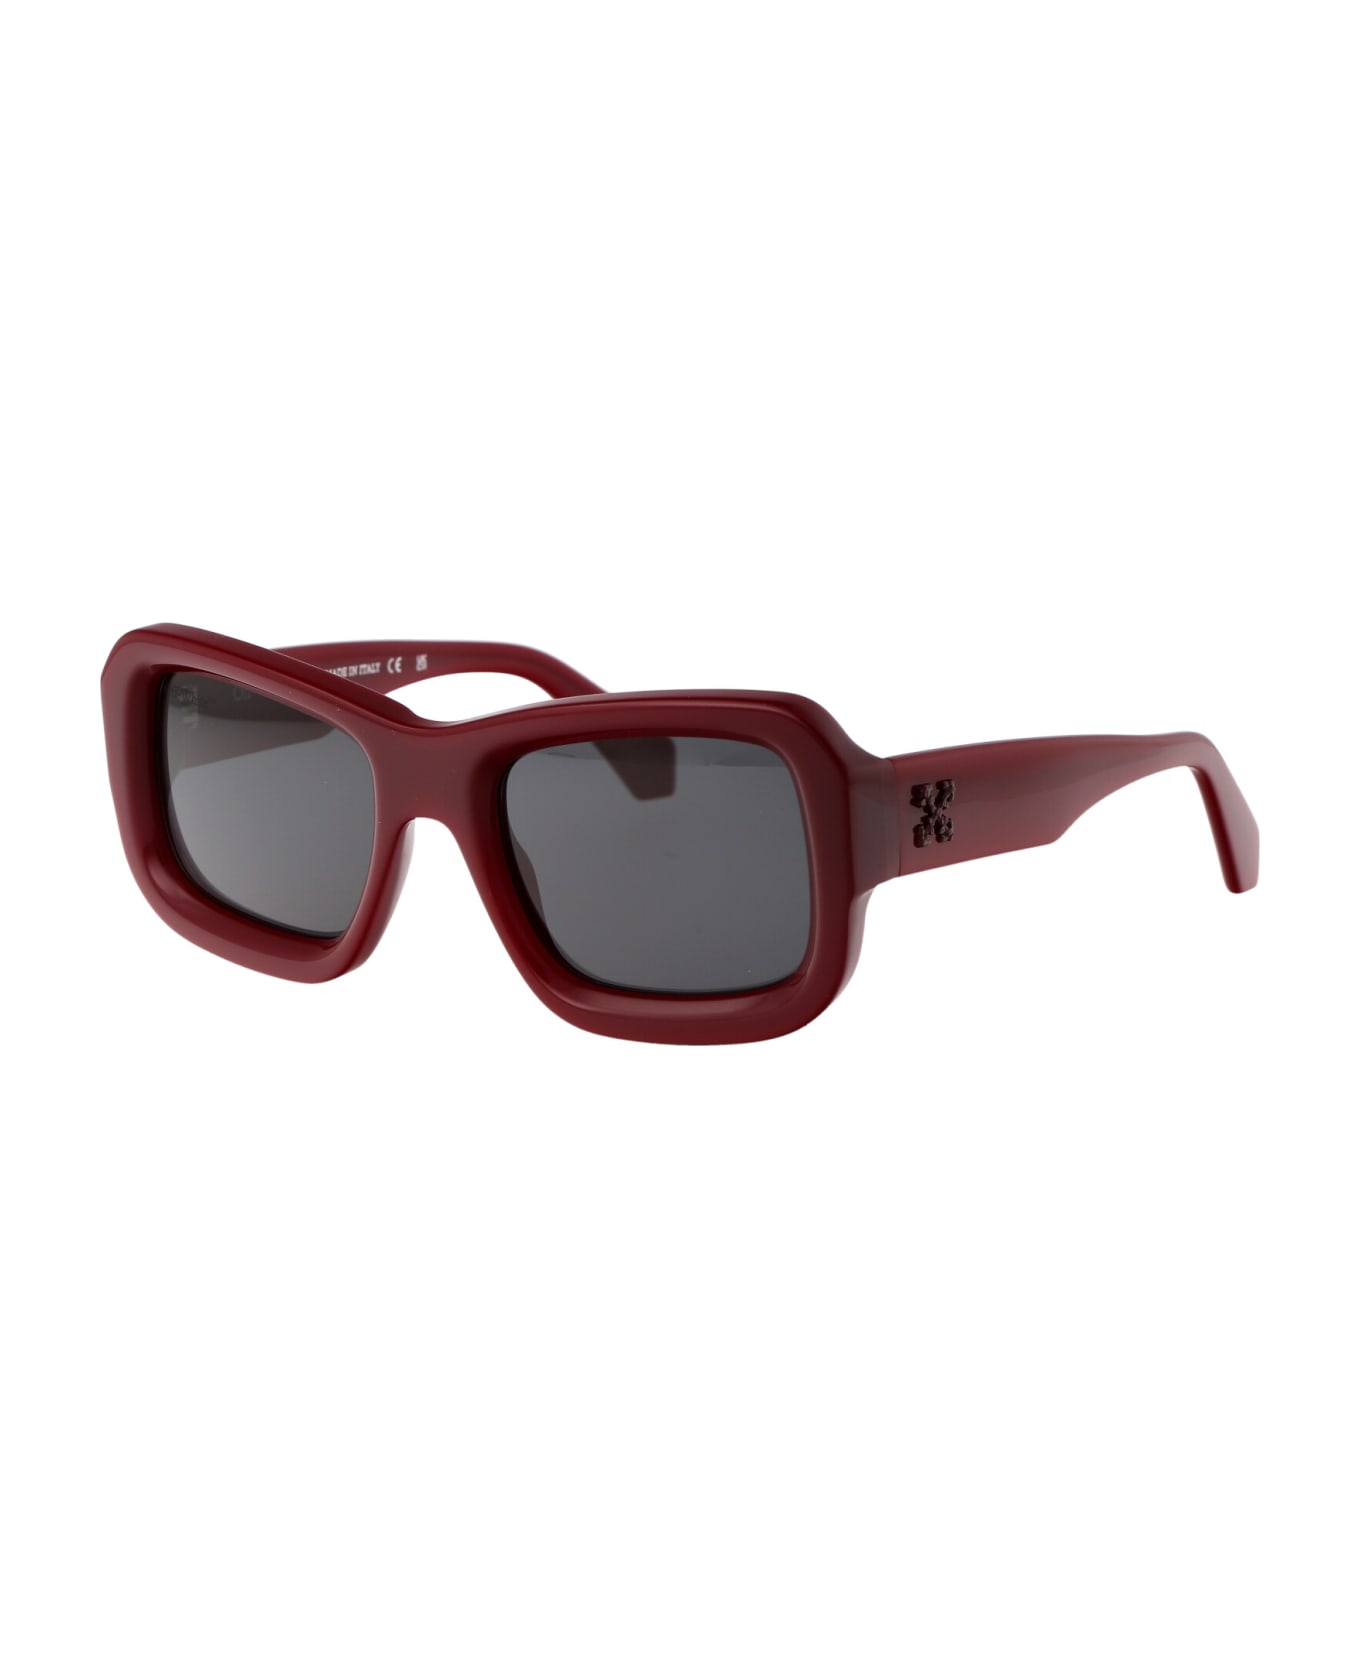 Off-White Verona Sunglasses - 2707 BURGUNDY